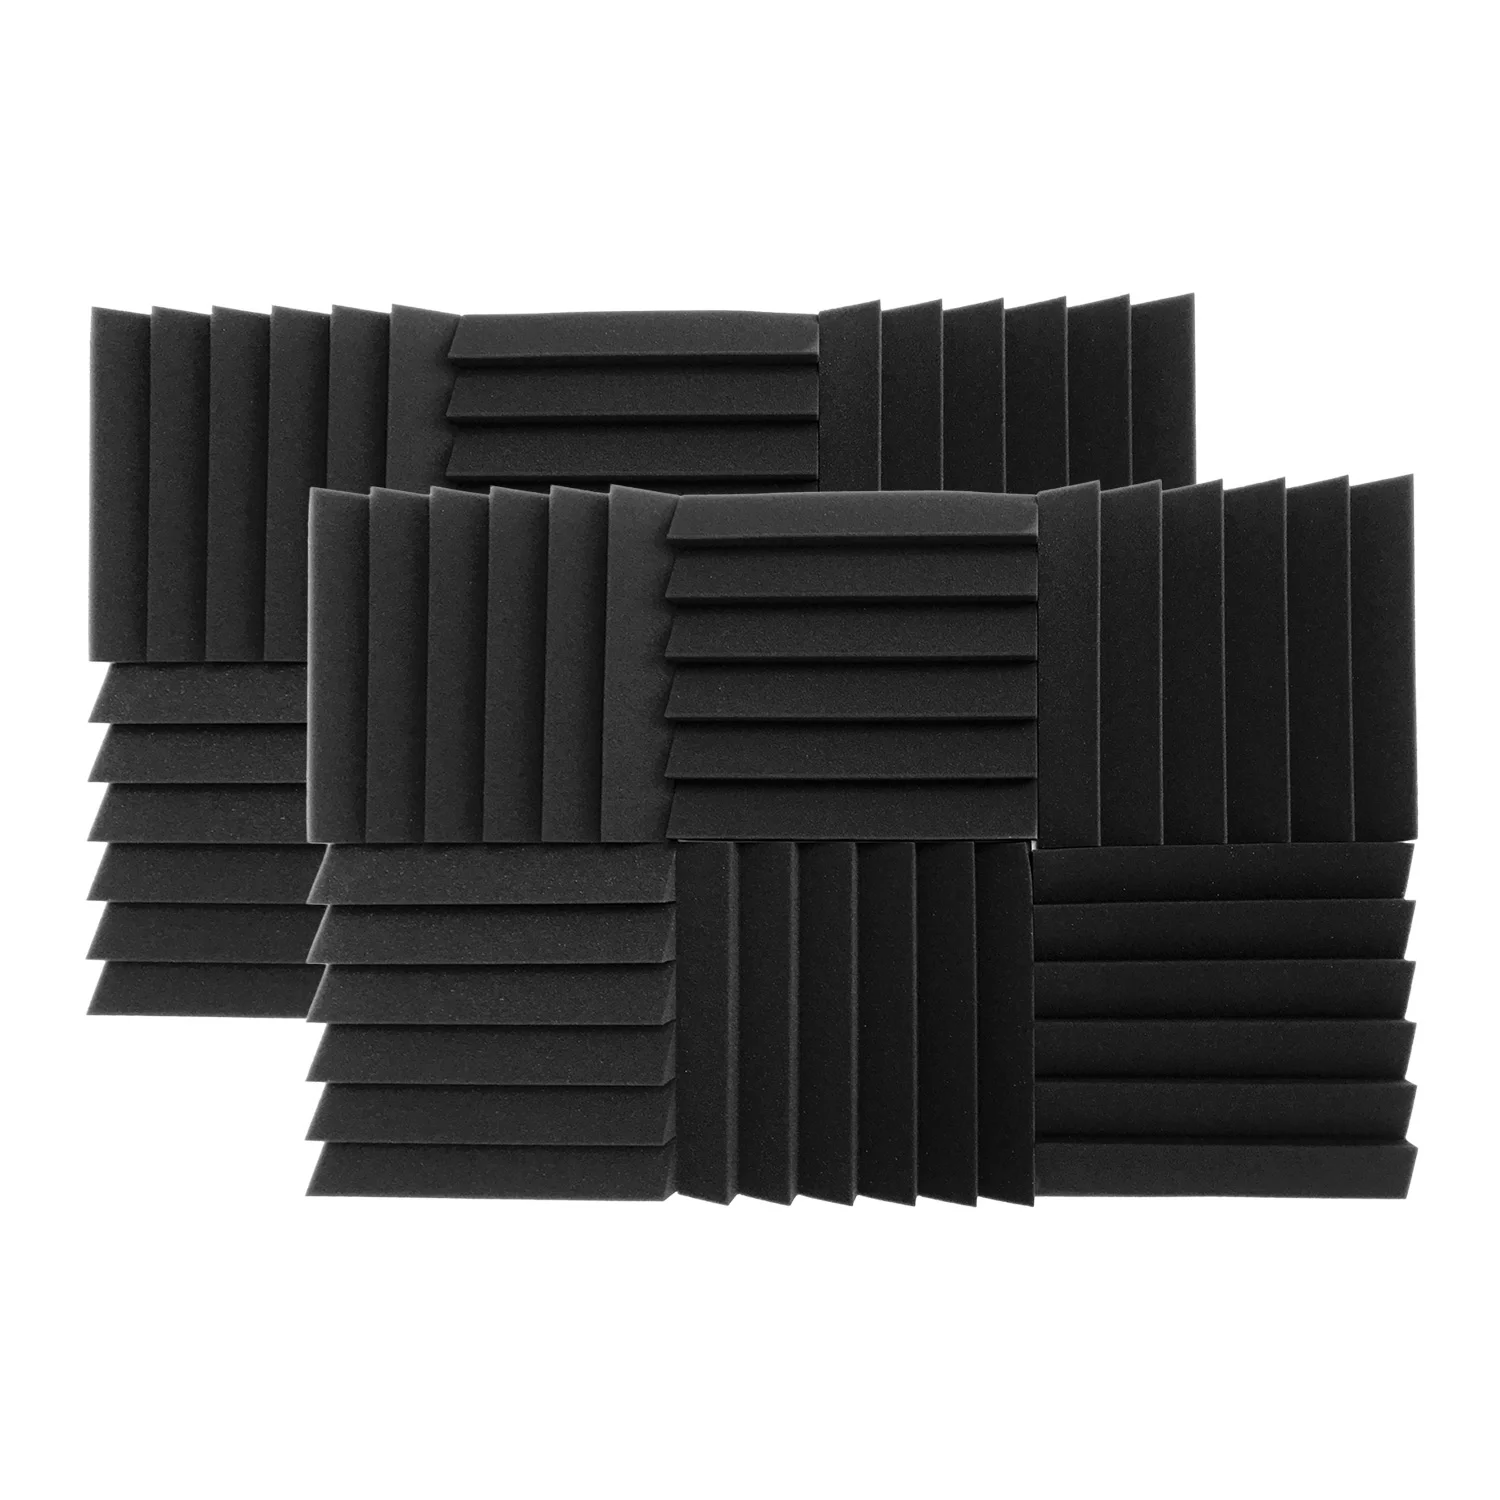 

12*12*2inch High Density Studio Acoustic Foams Panels Sound Insulation Foam Fire Retardant for Studio KTV Broadcast